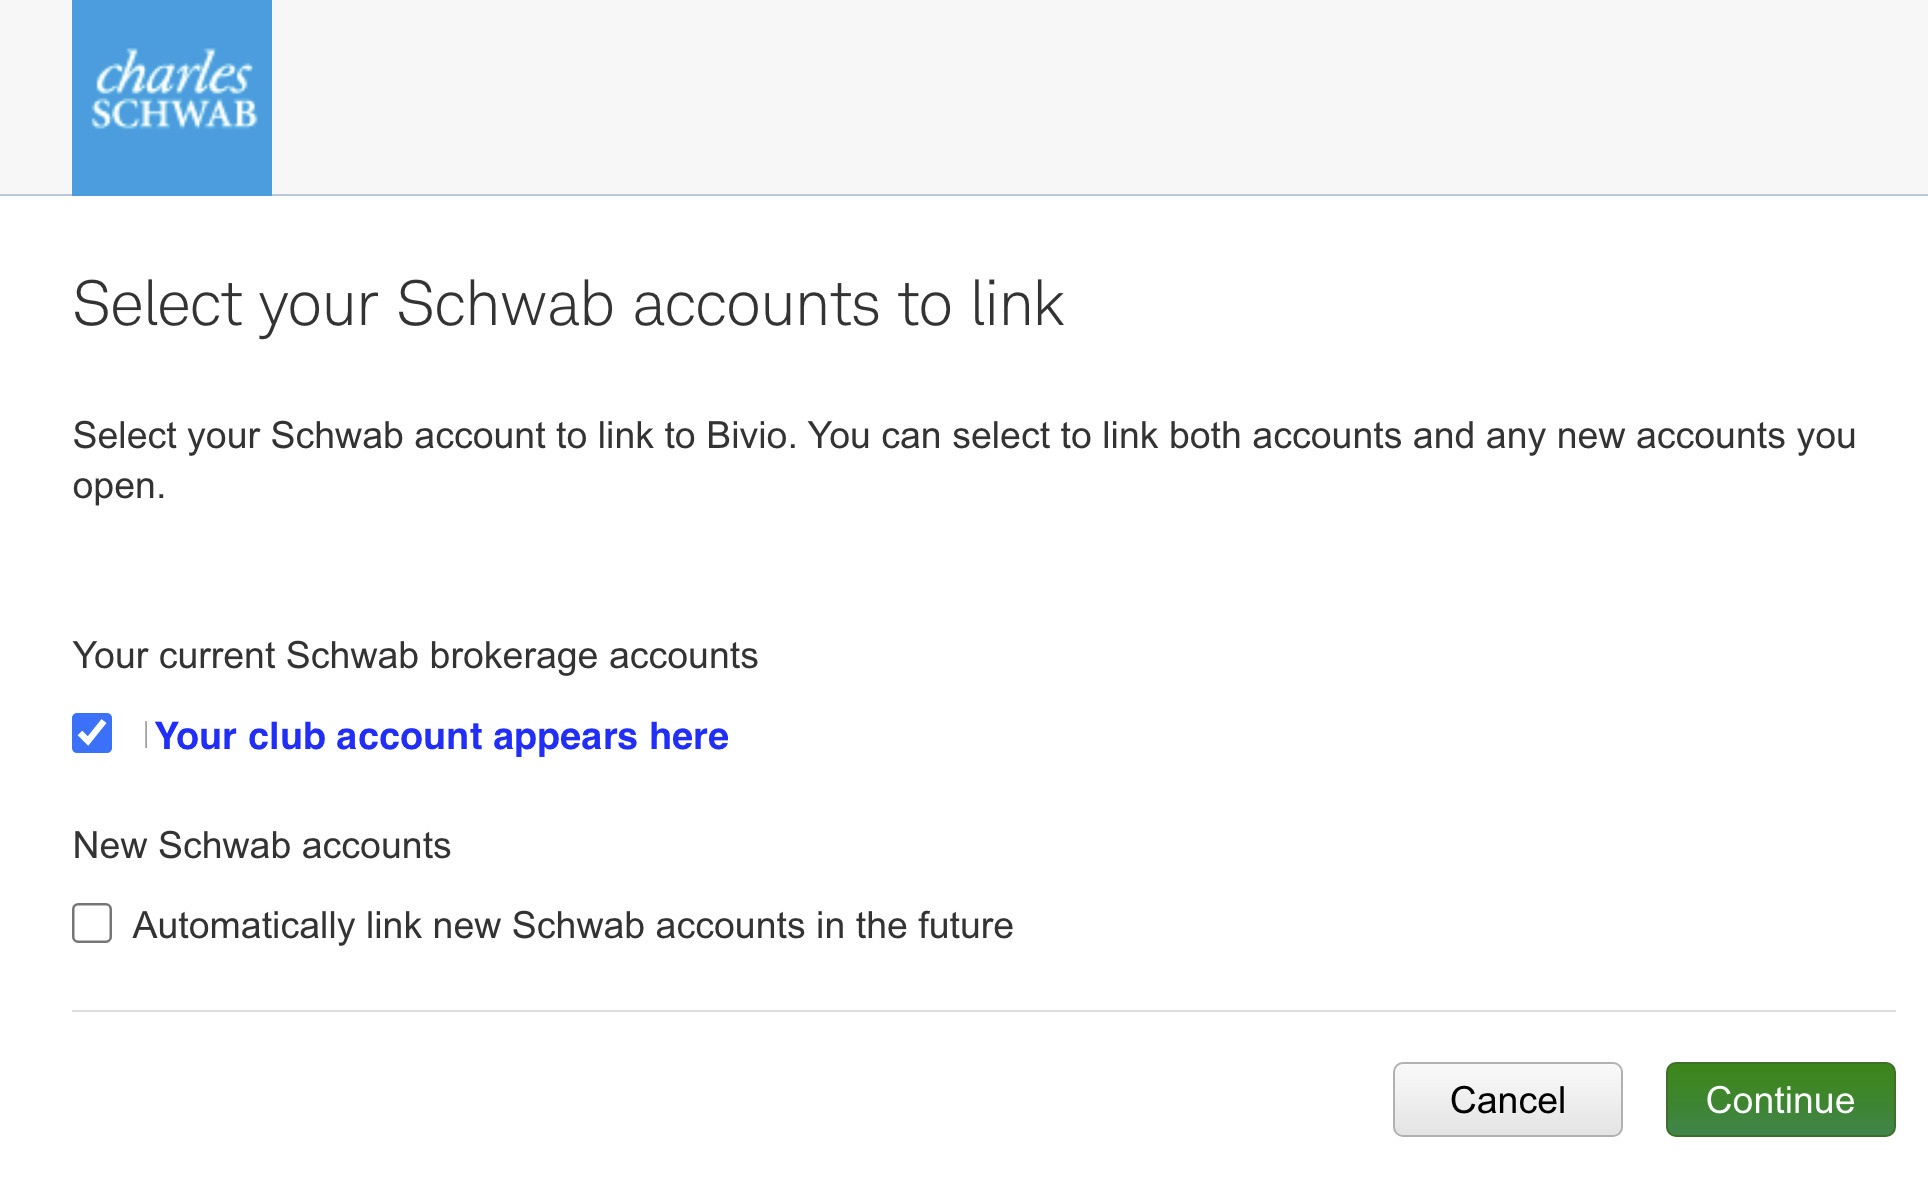 Schwab-09-Accounts-To-Link.jpg